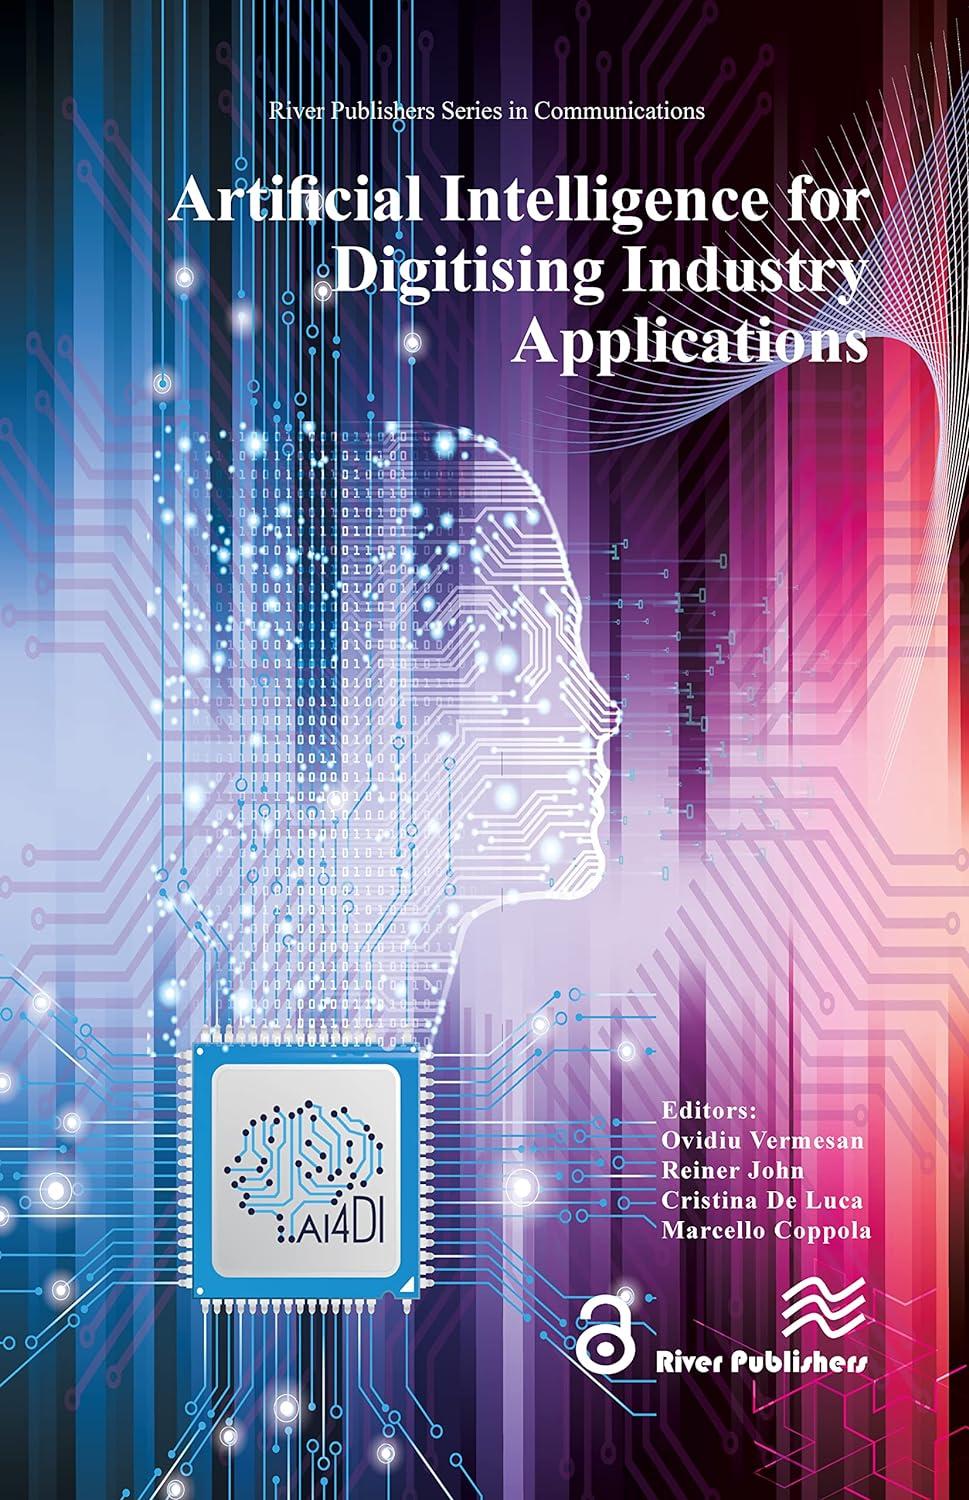 artificial intelligence for digitising industry 1st edition ovidiu vermesan 8770226644, 978-8770226646